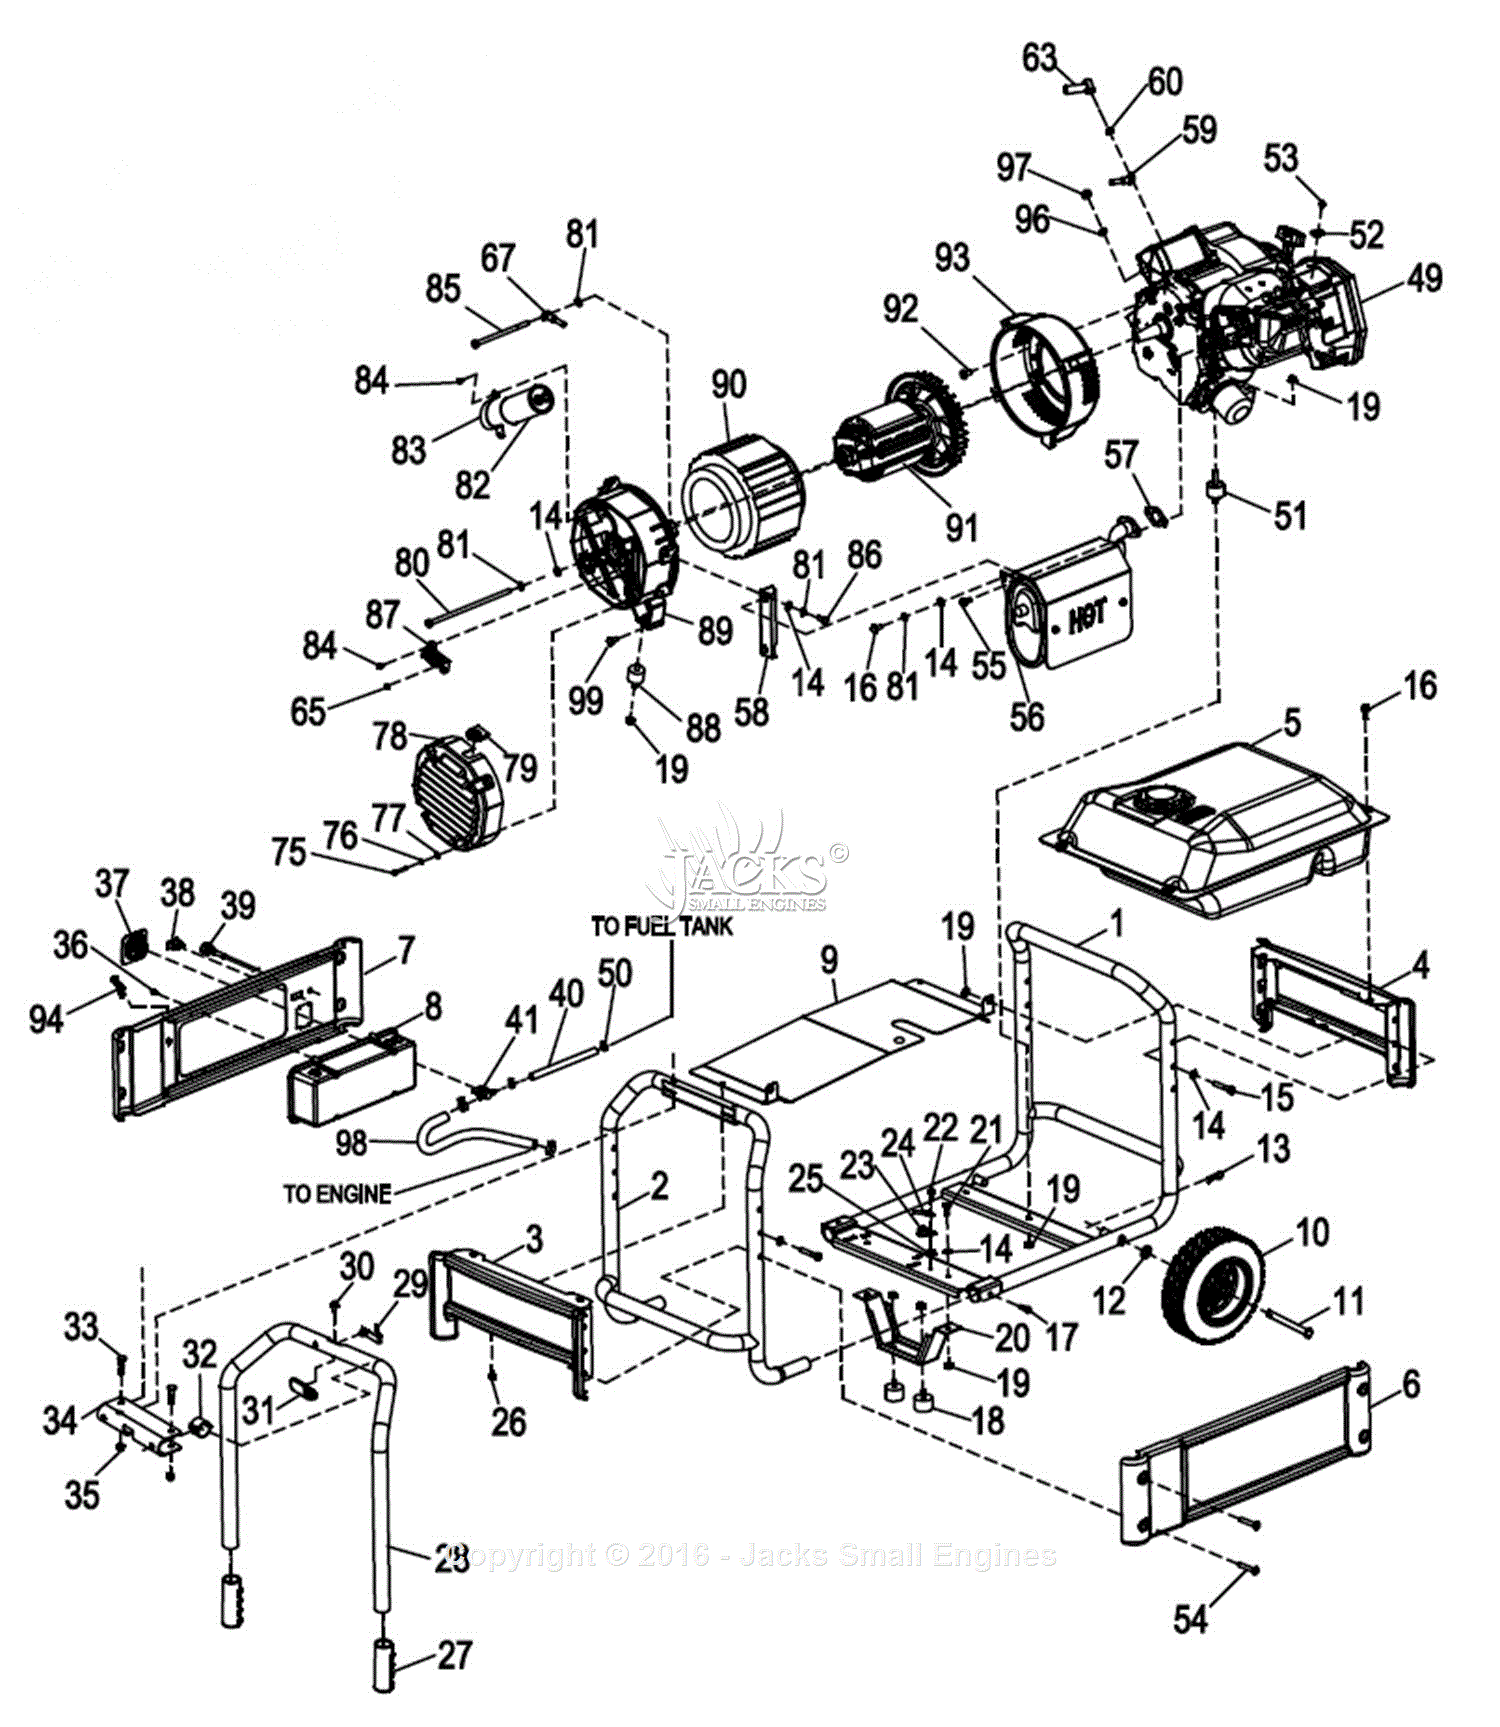 Generac Wiring Diagram Model 4969